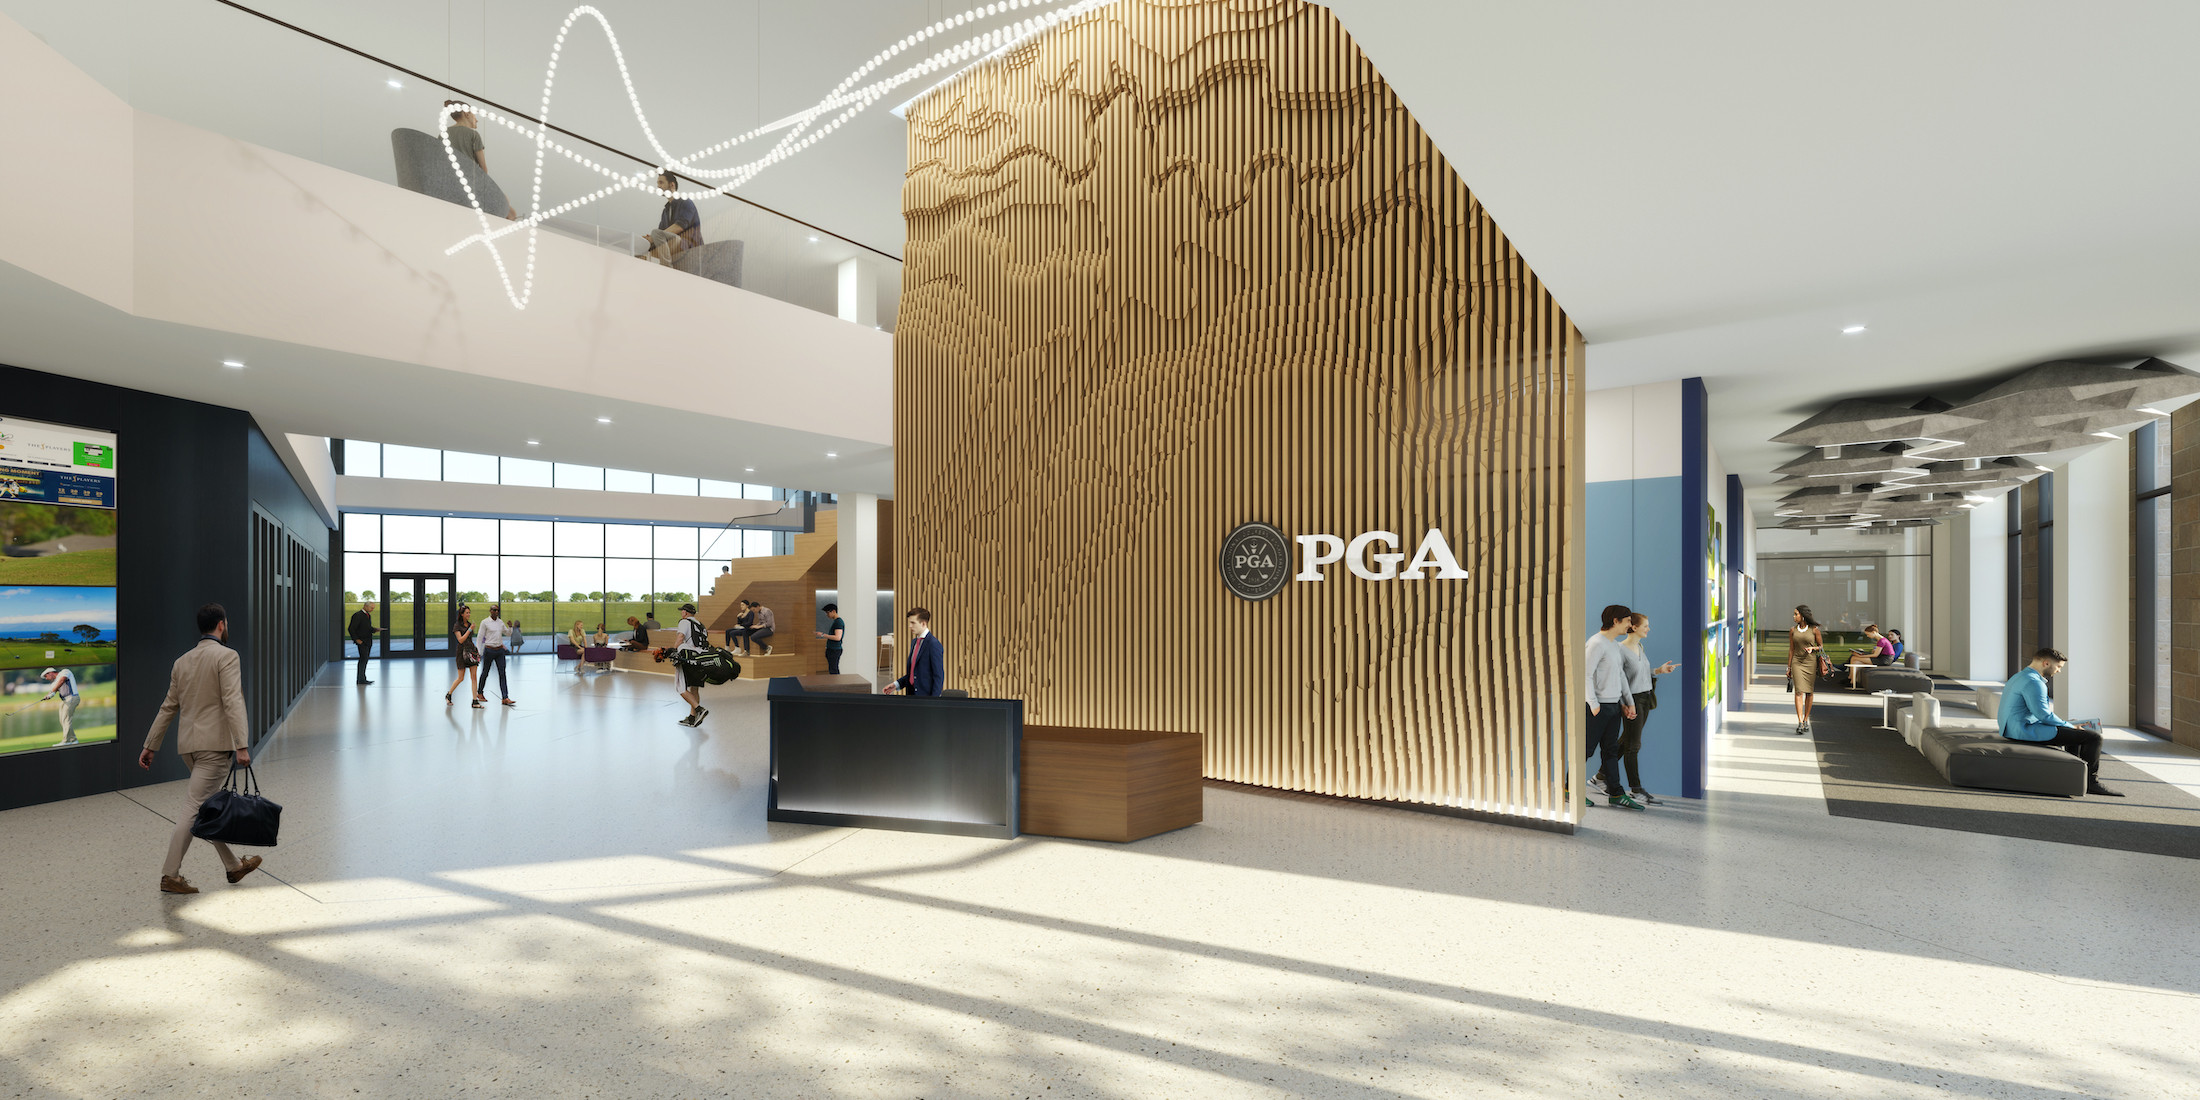 Rendering of PGA of America's new office lobby.